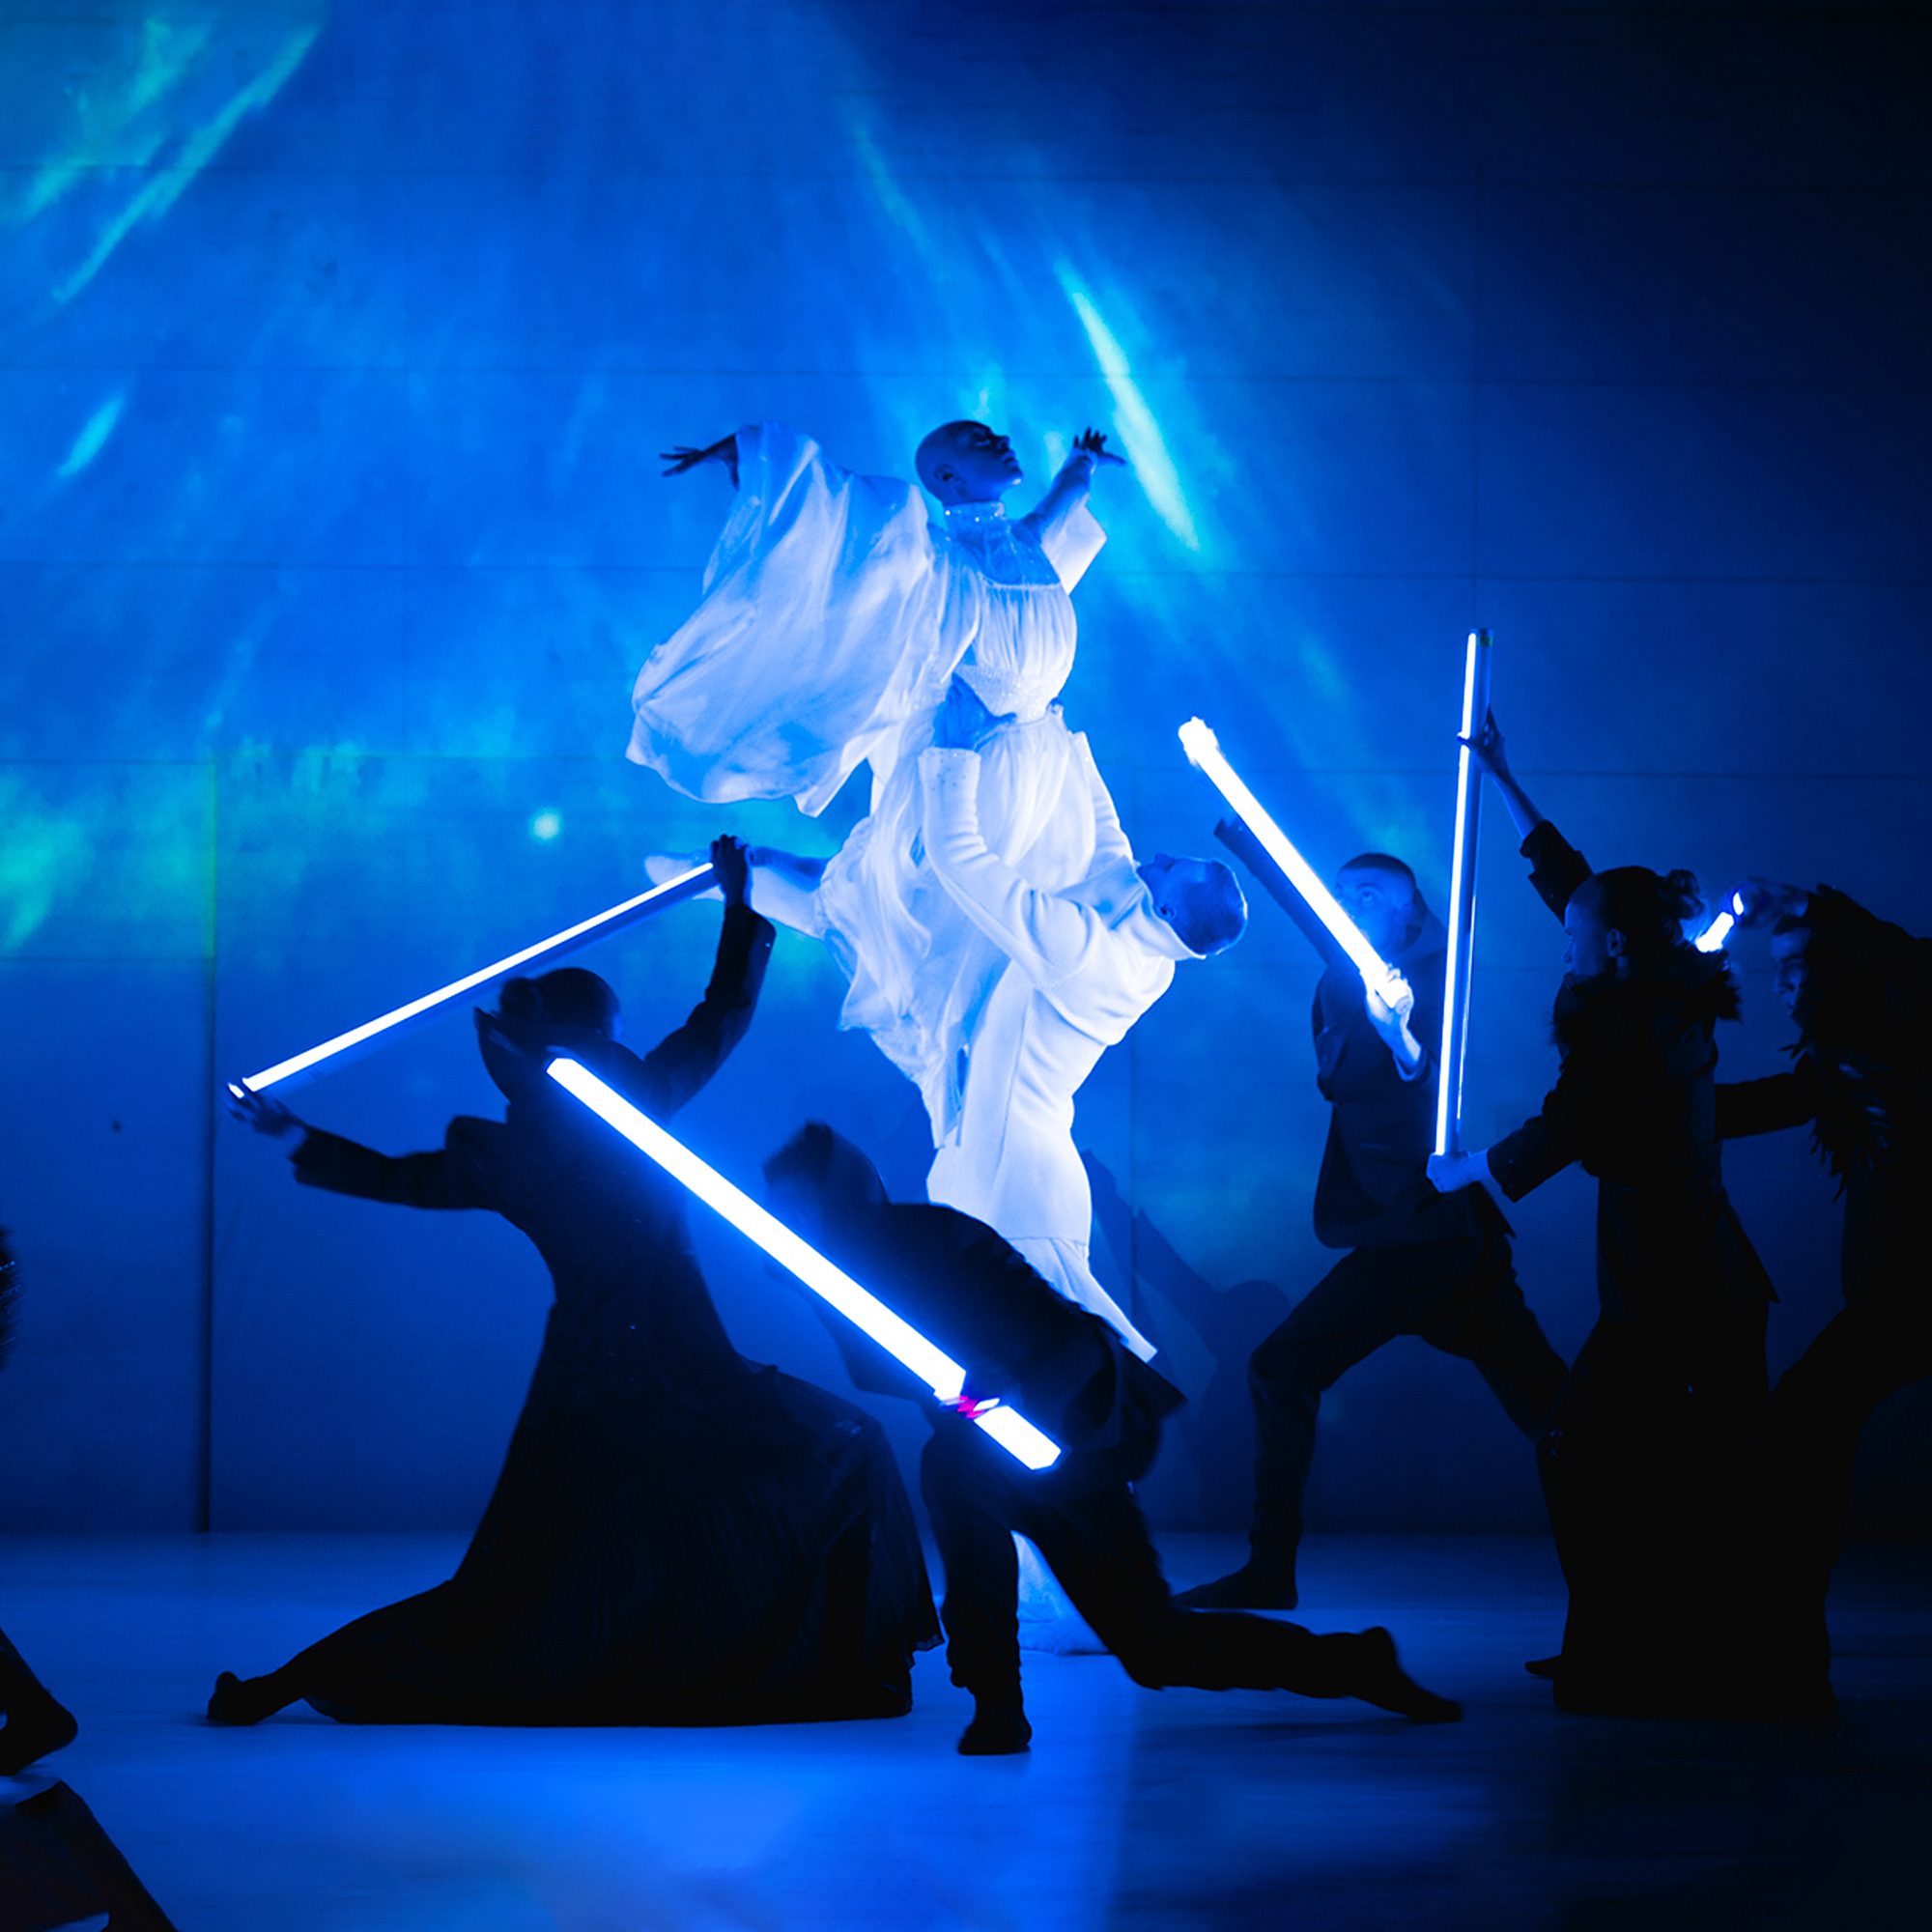 nova led light blue dancers dancer white astera's